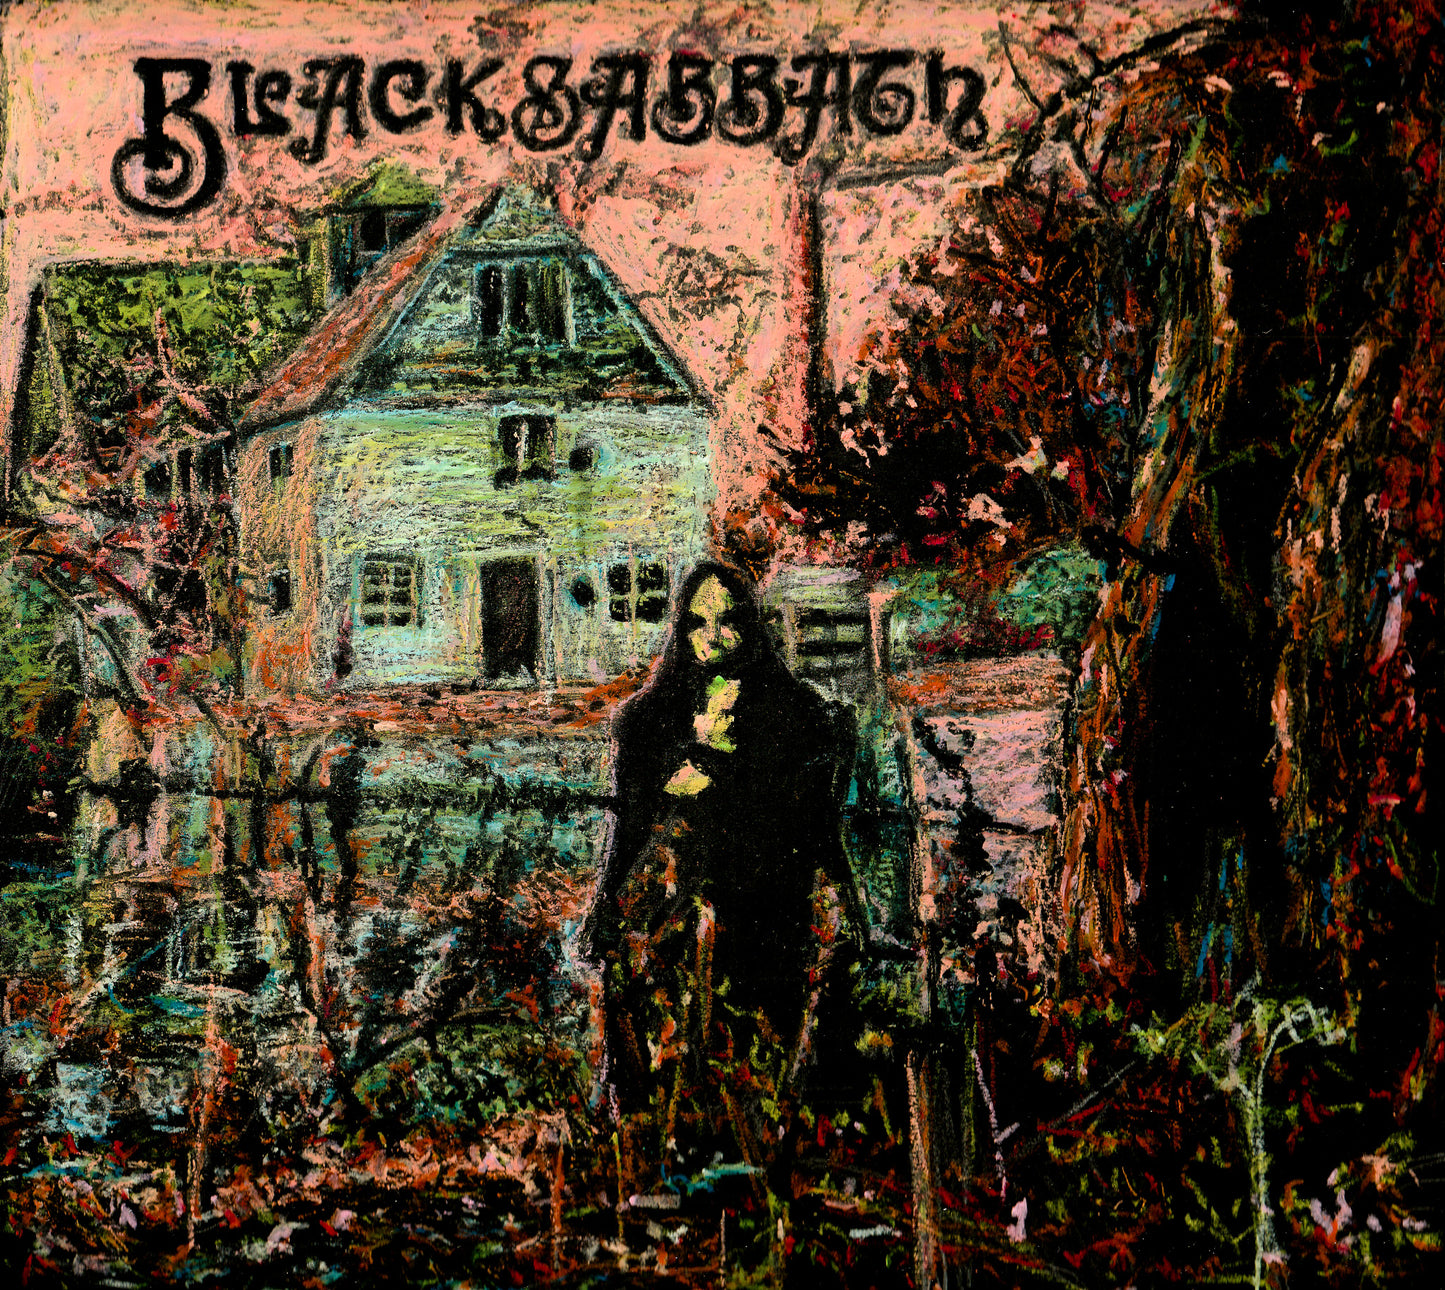 Black Sabbath: Black Sabbath - Album Art Homage (print)